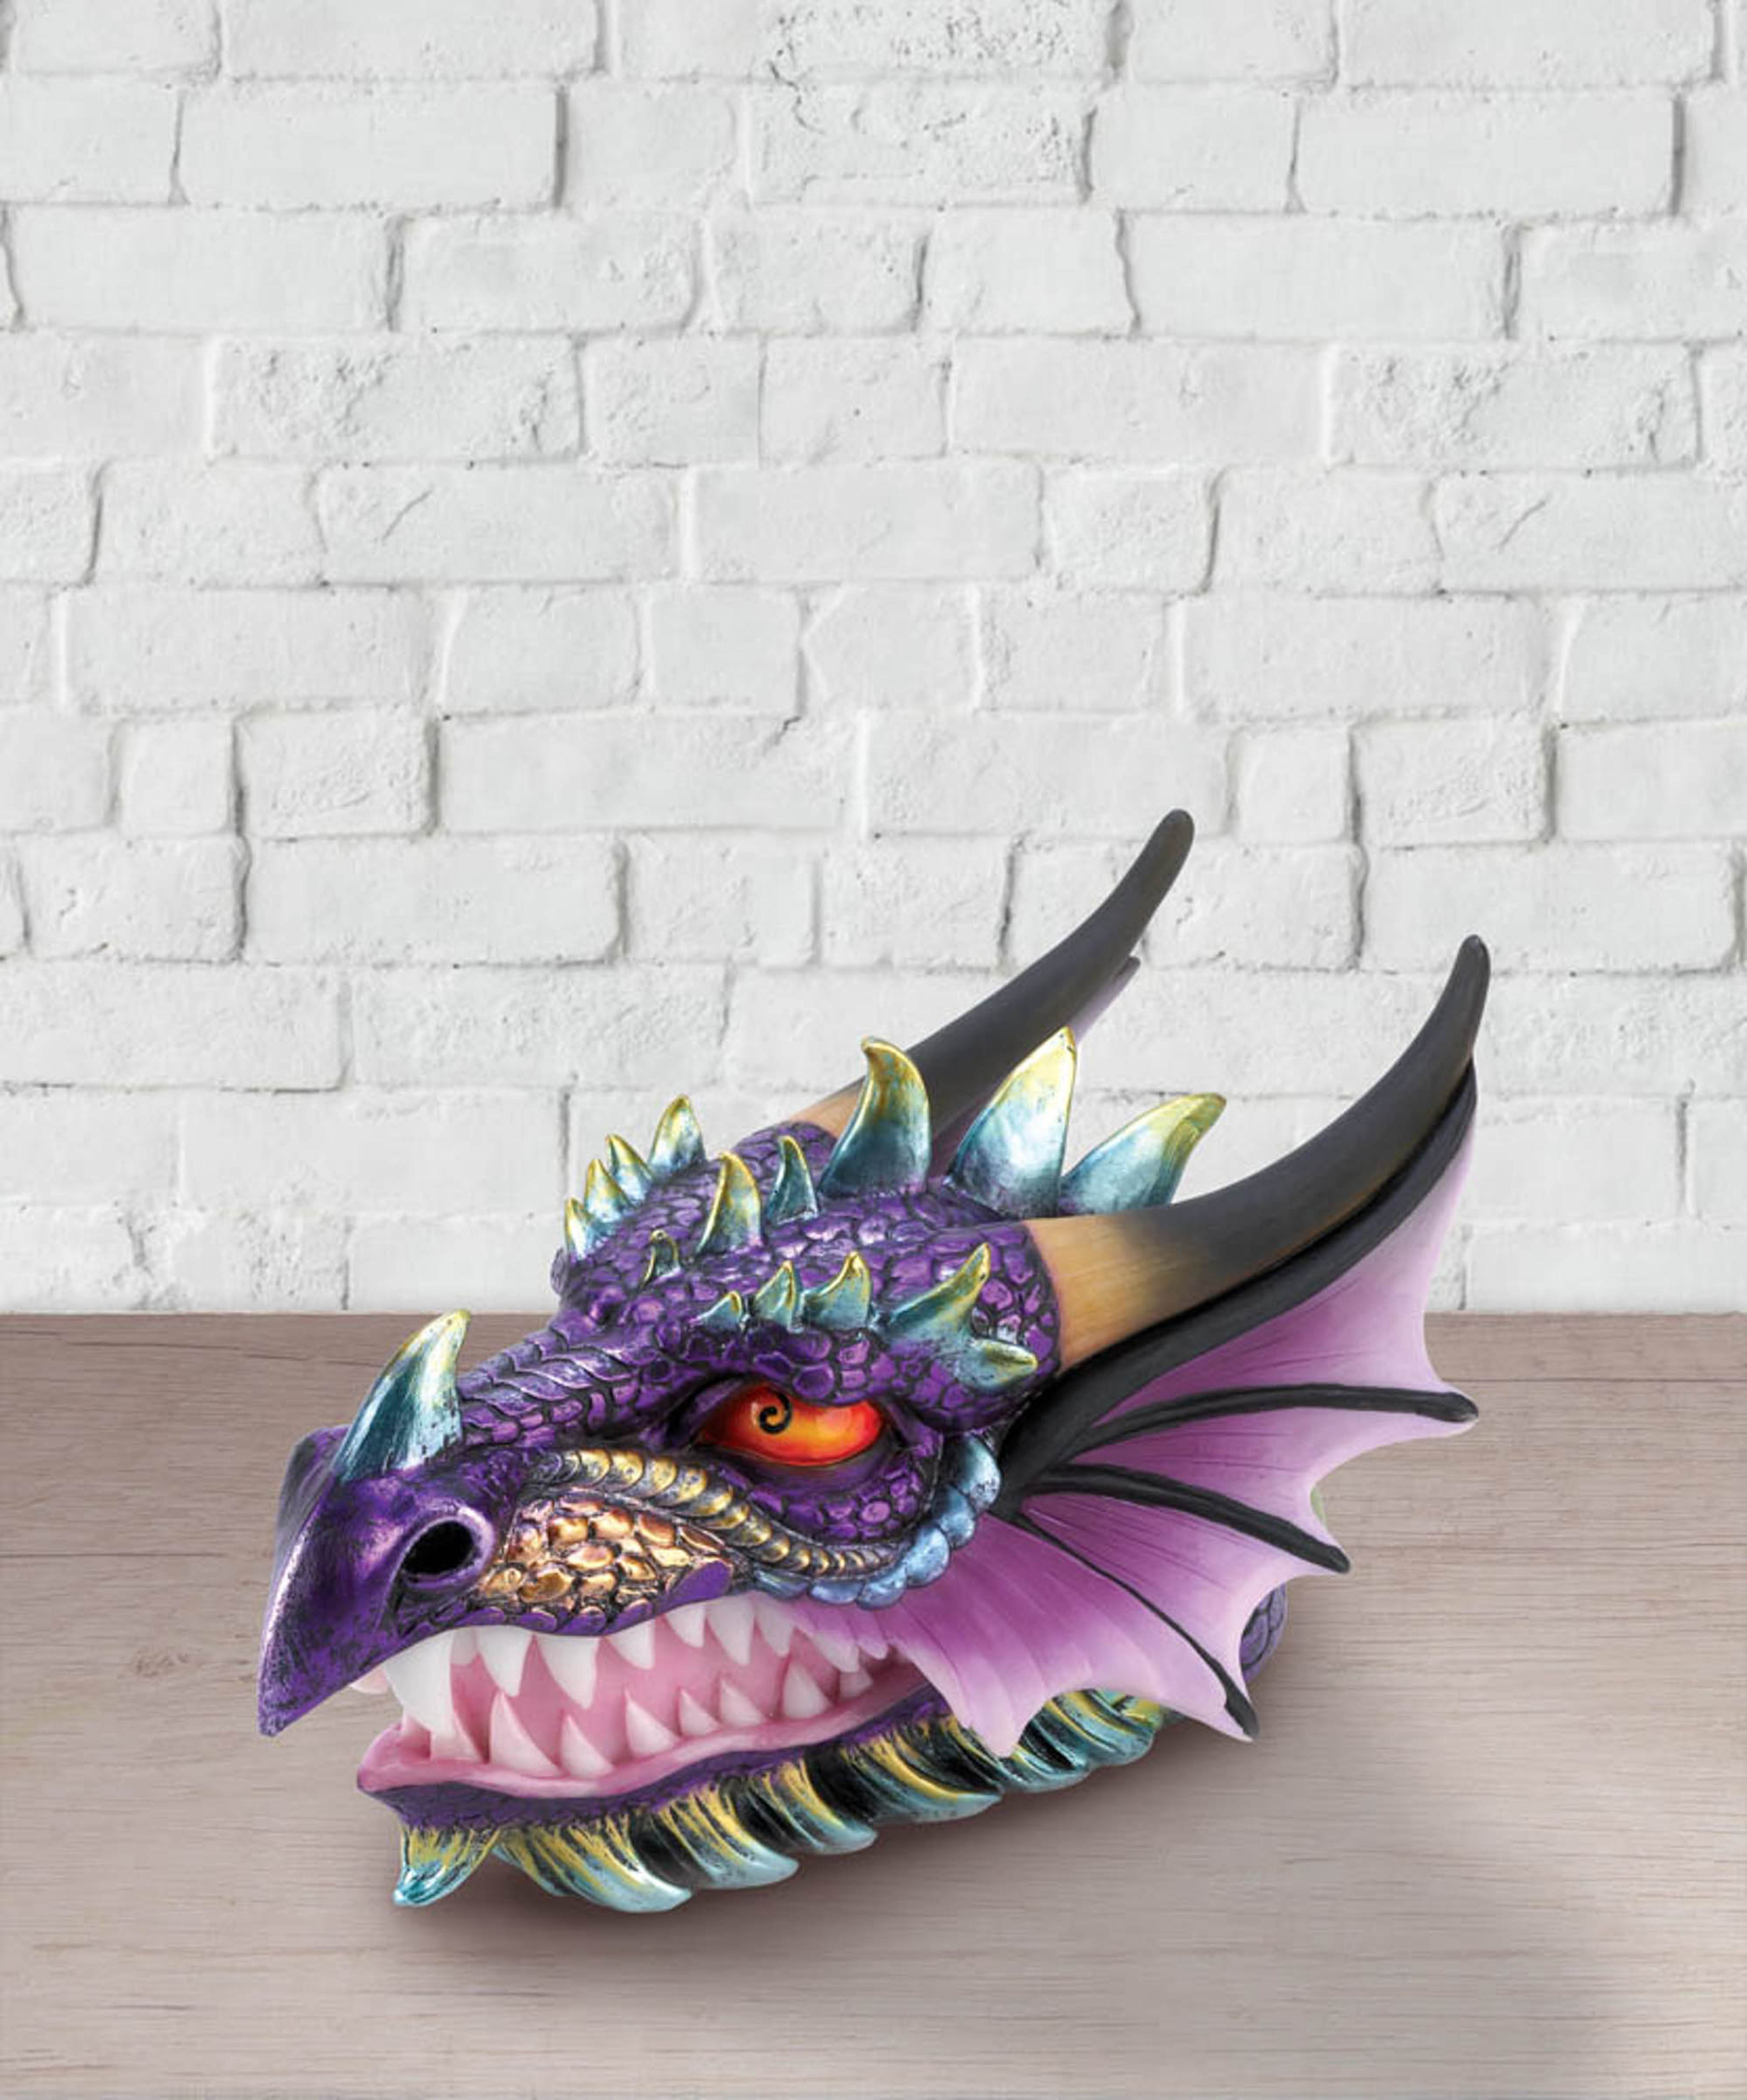 (c) Dragon-figurines.com